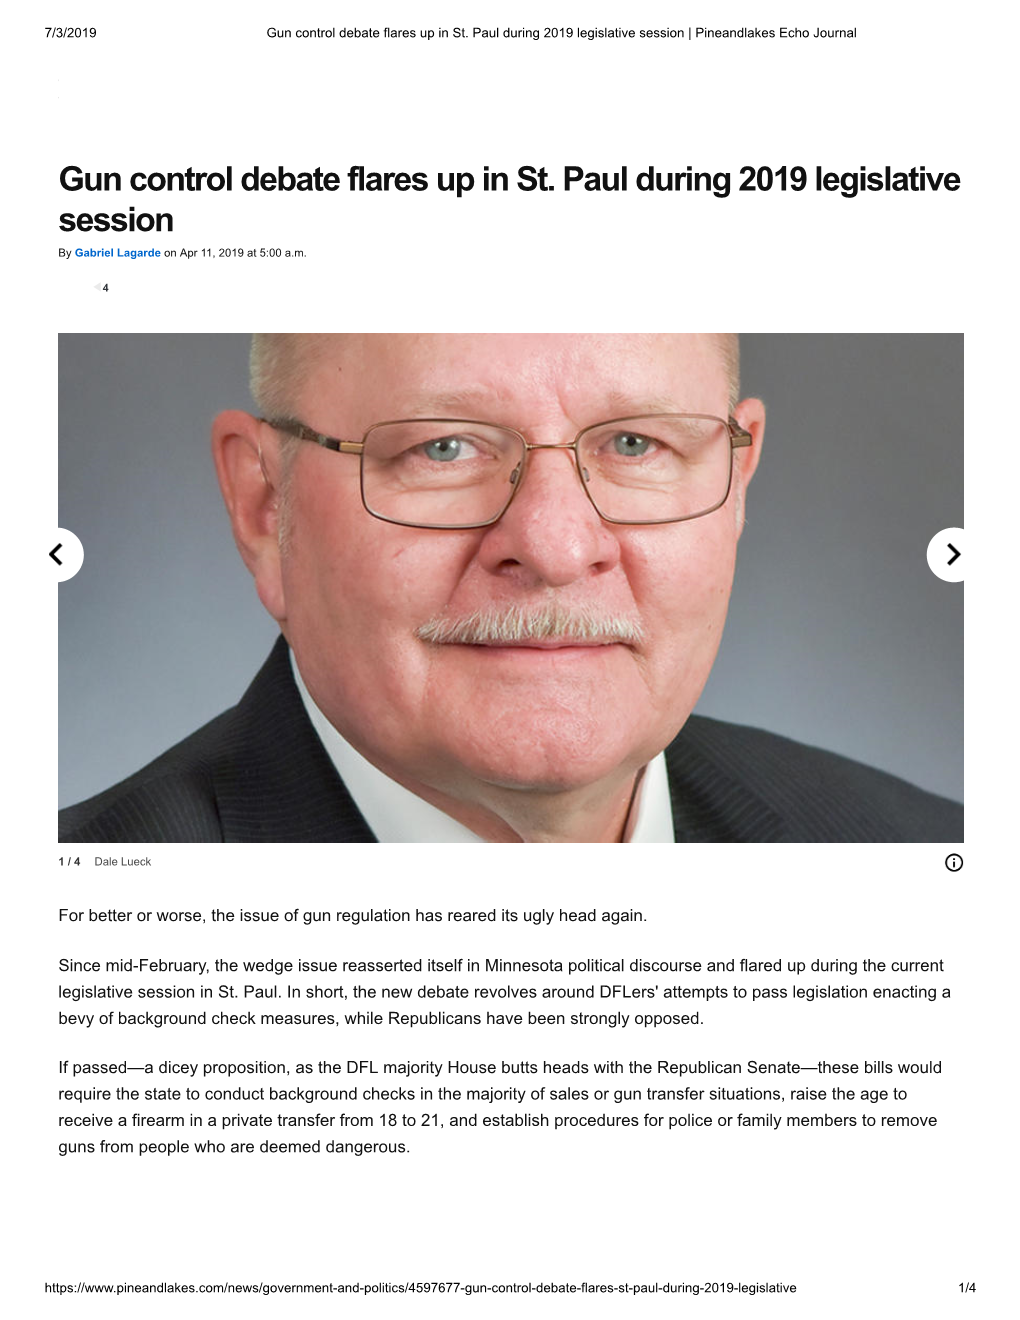 Gun Control Debate Flares up in St. Paul During 2019 Legislative Session | Pineandlakes Echo Journal